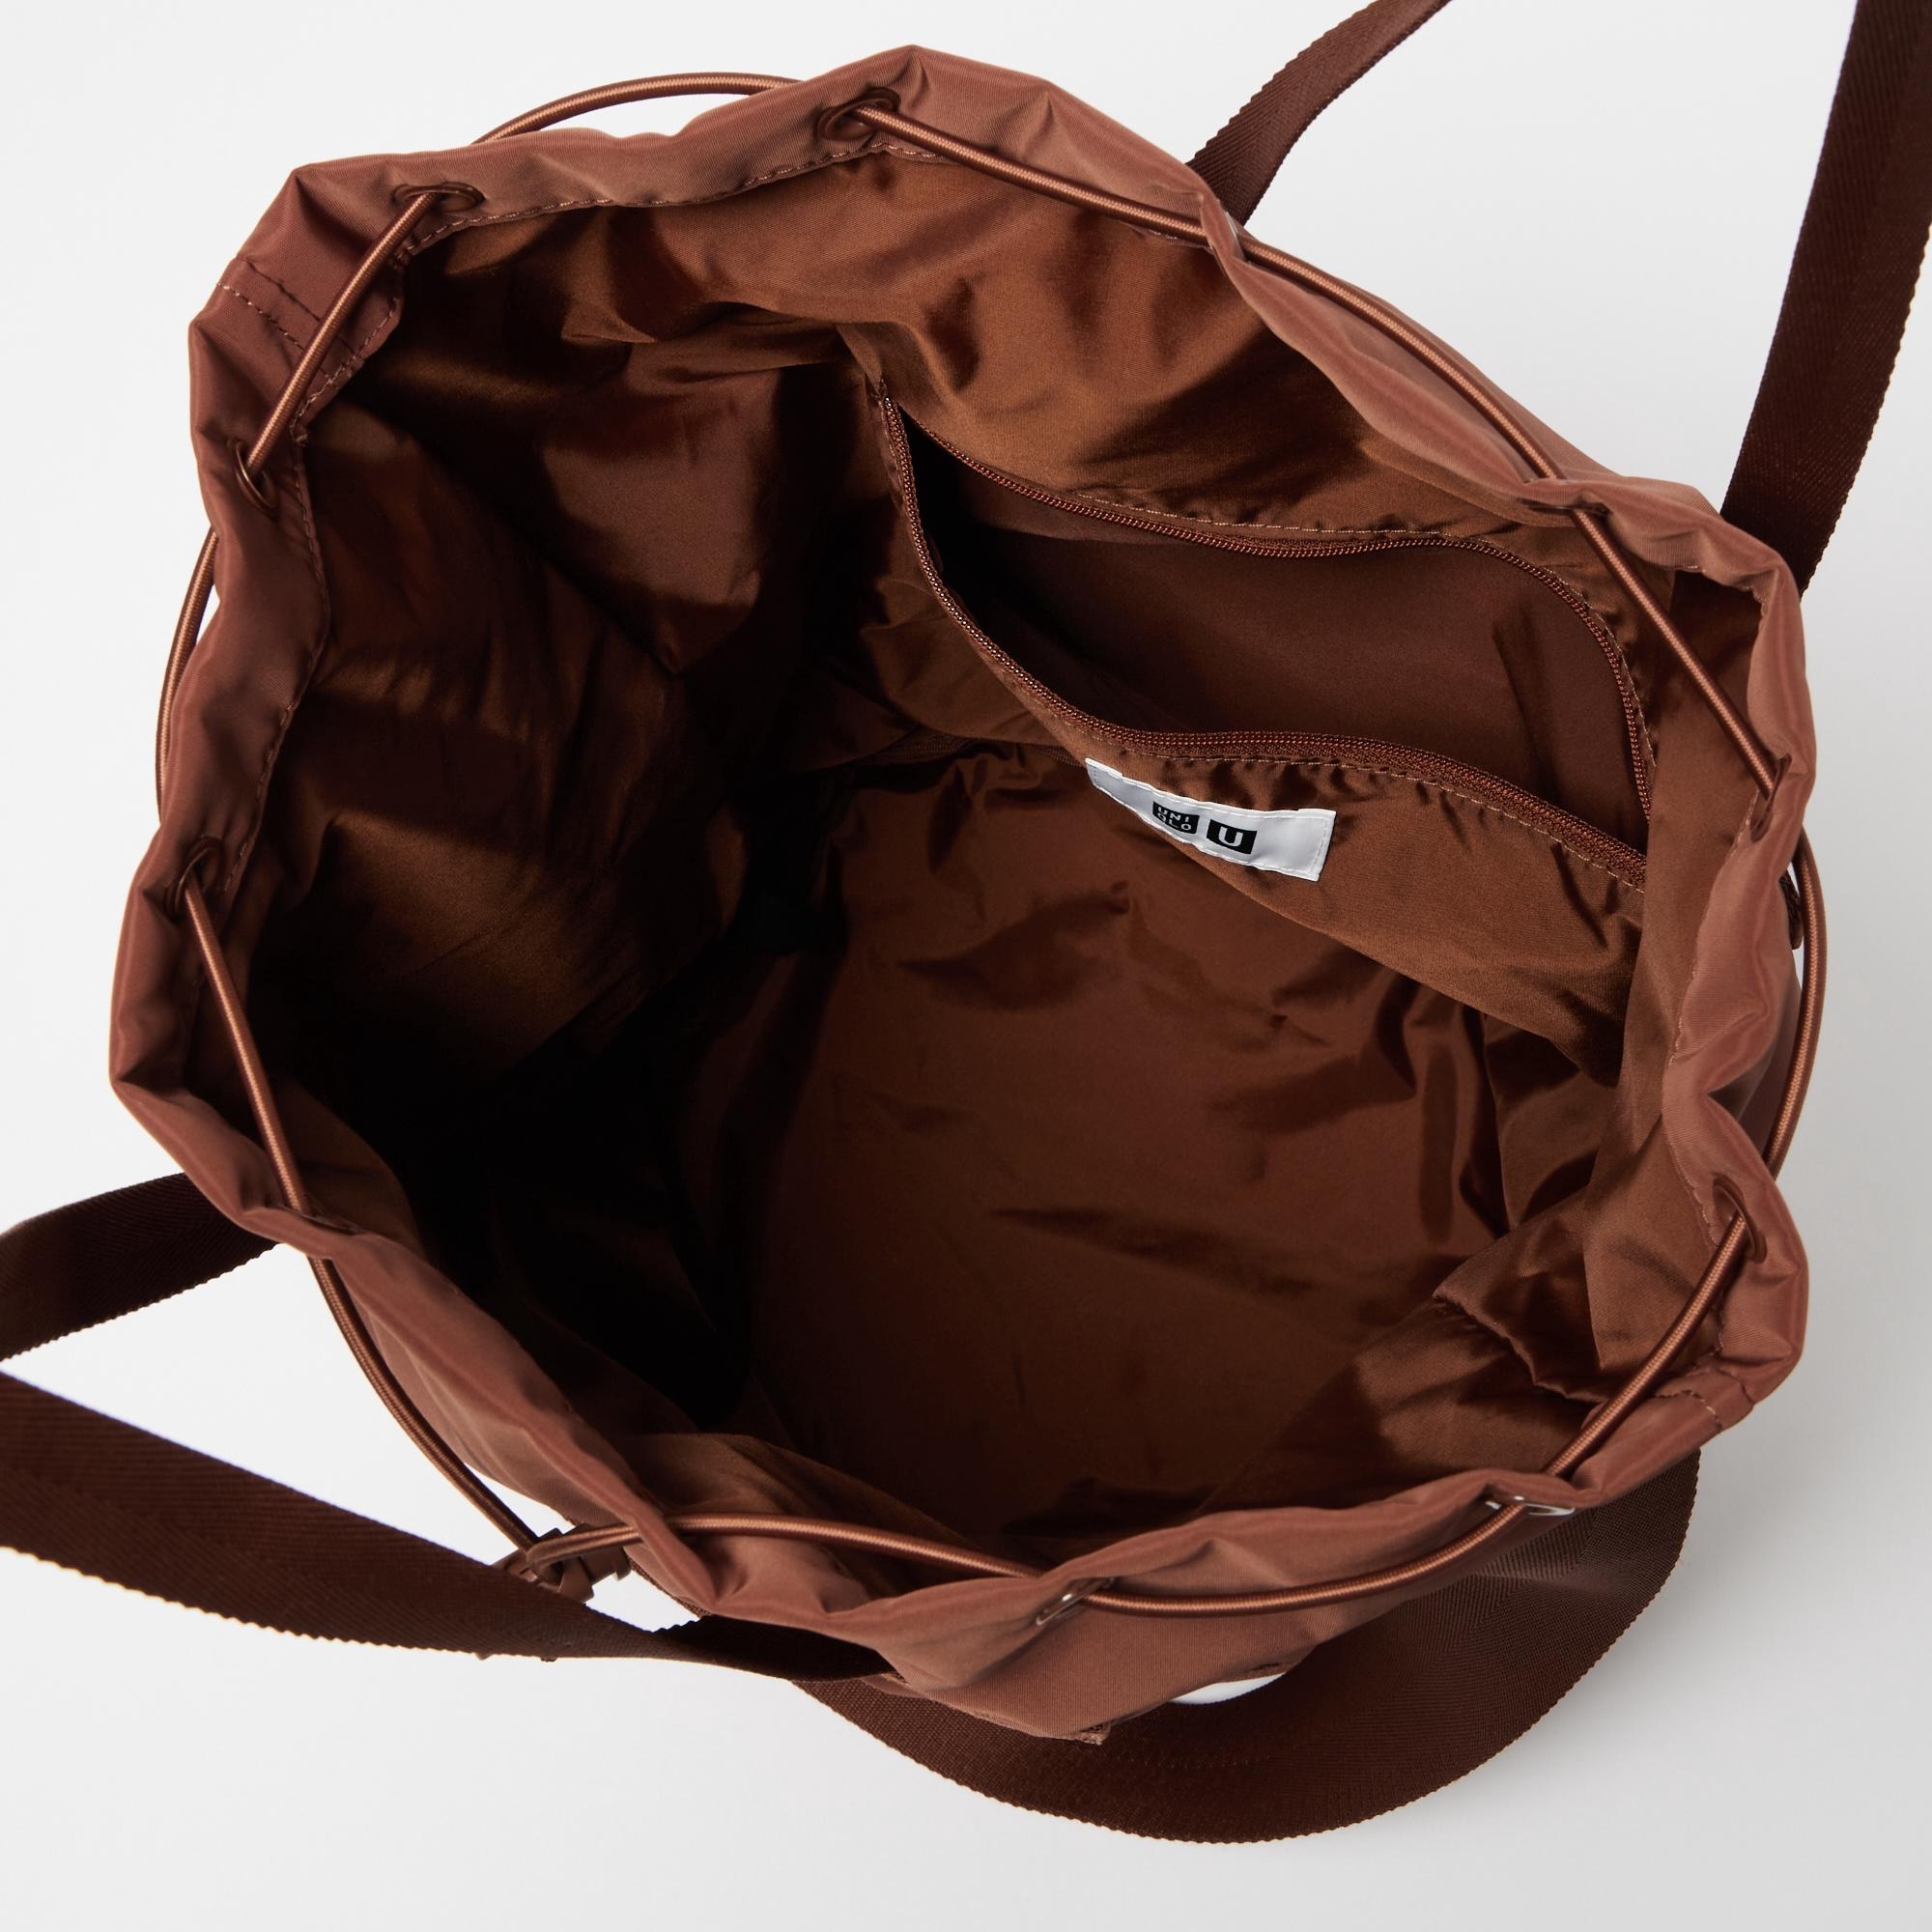 Gramercy Medium Bucket Bag | Kate Spade New York